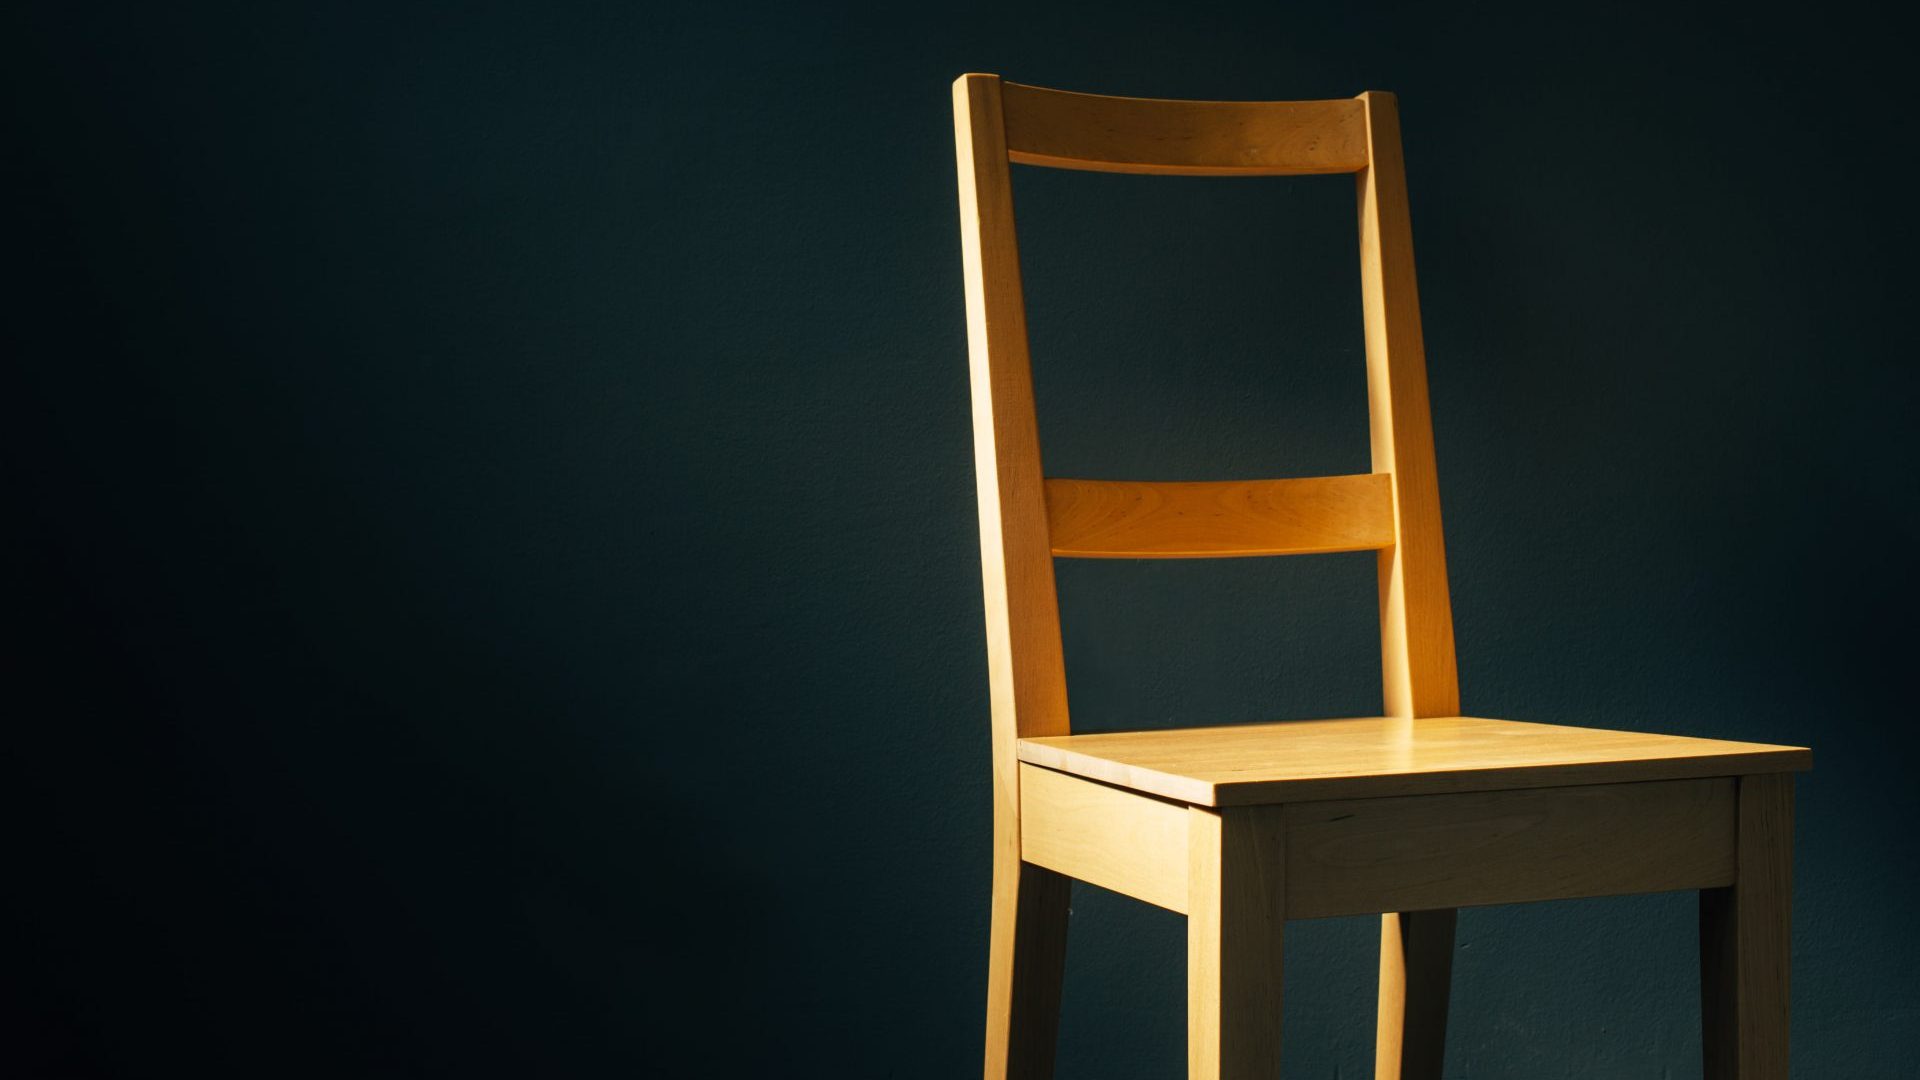 empty-wooden-chair-in-dark-room-PFJYSNE-min